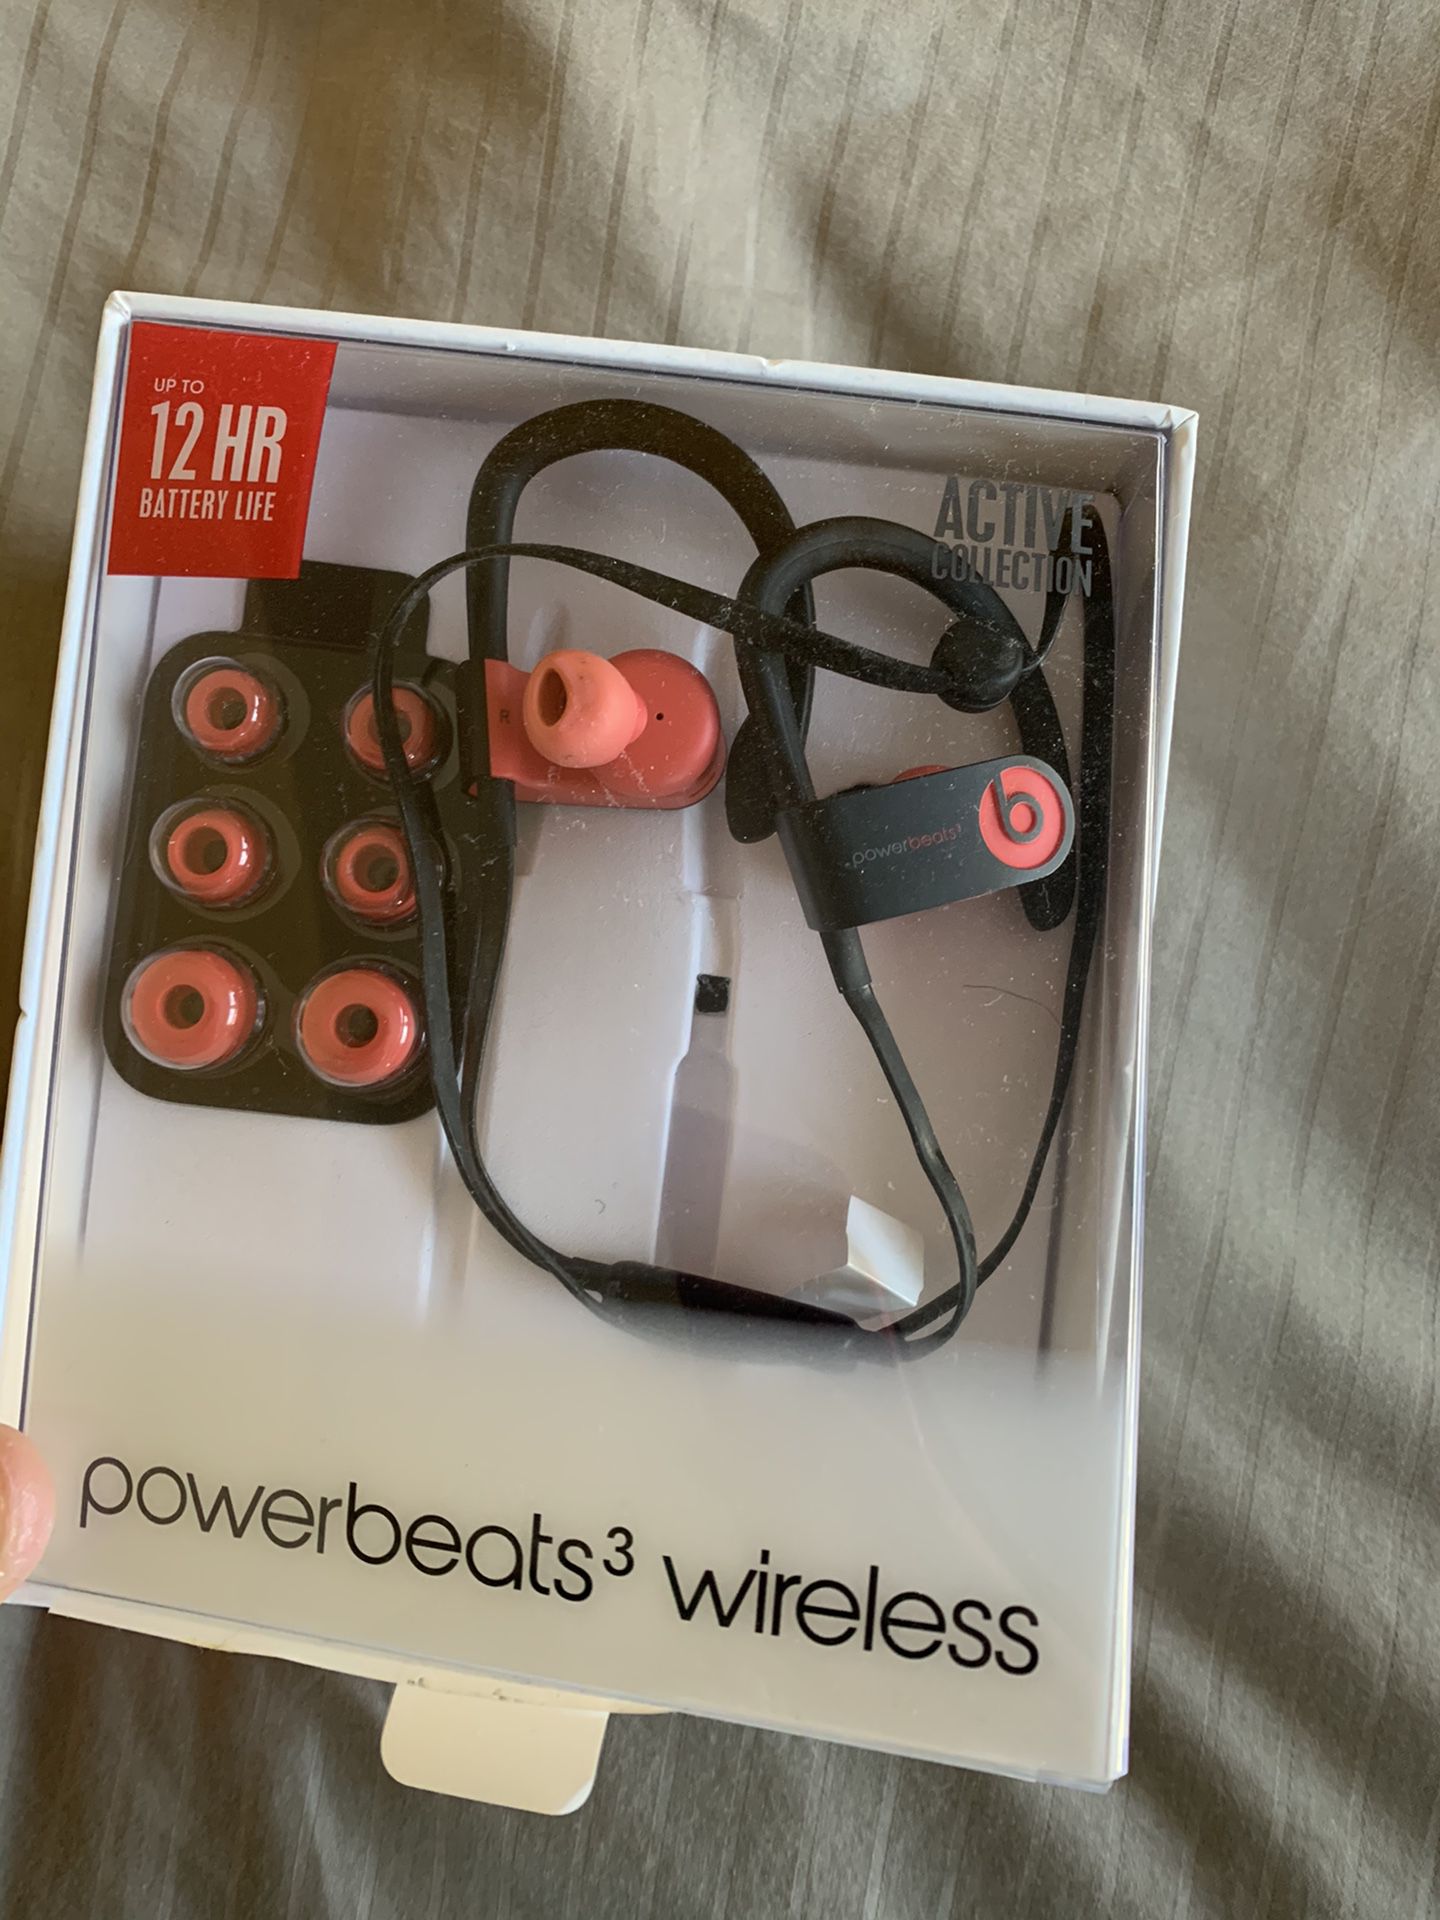 Powerbeats 3 Wireless